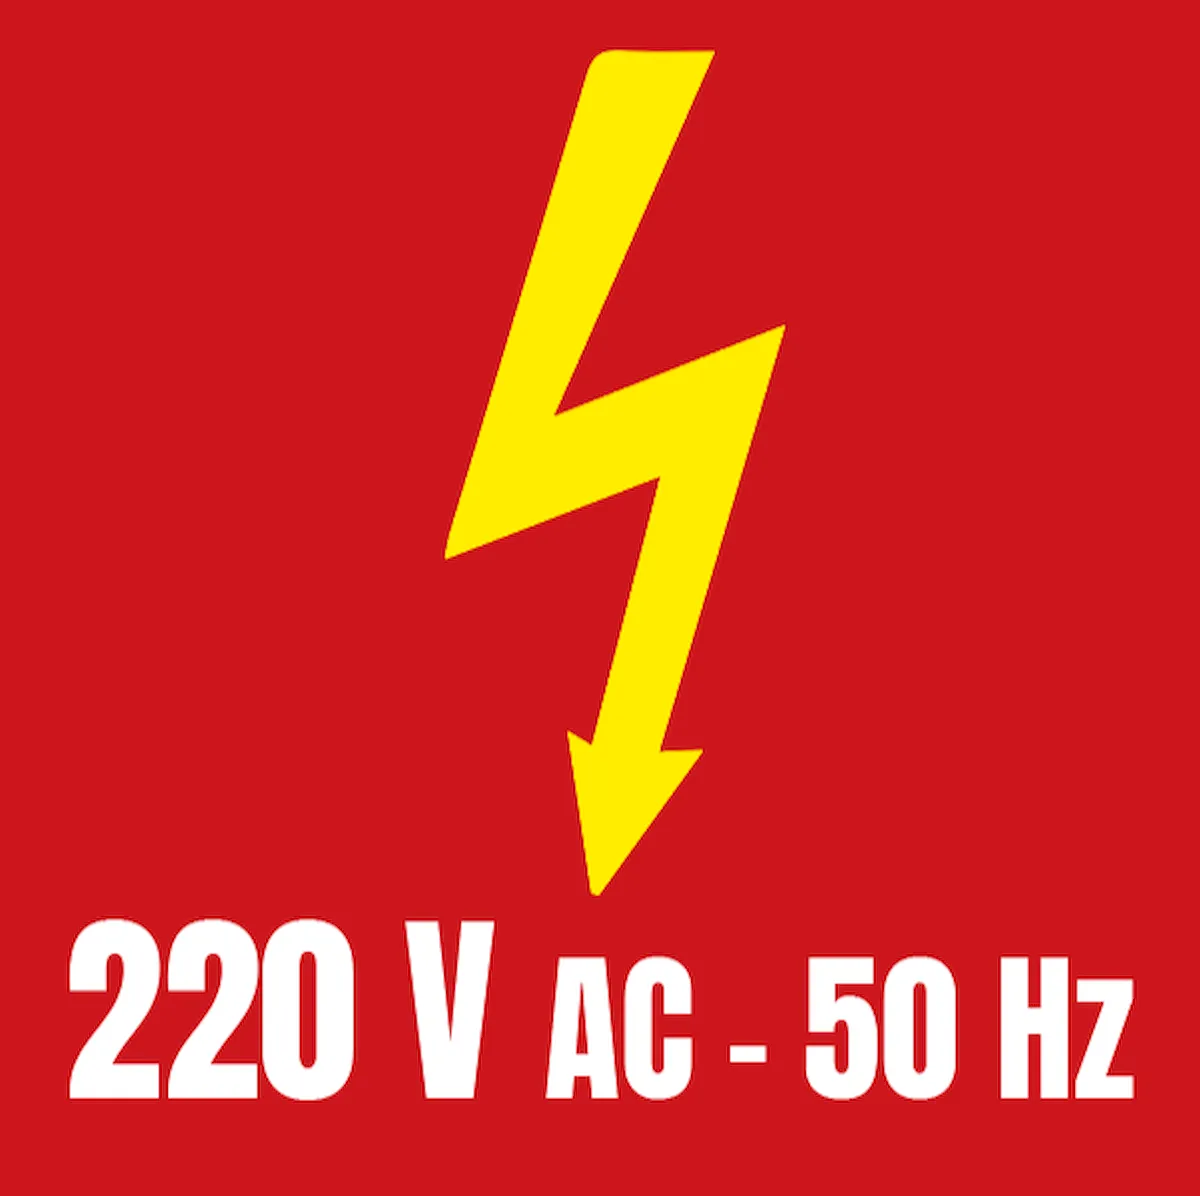 220 Volt AC - 50 Hz - sticker autocollant 060324